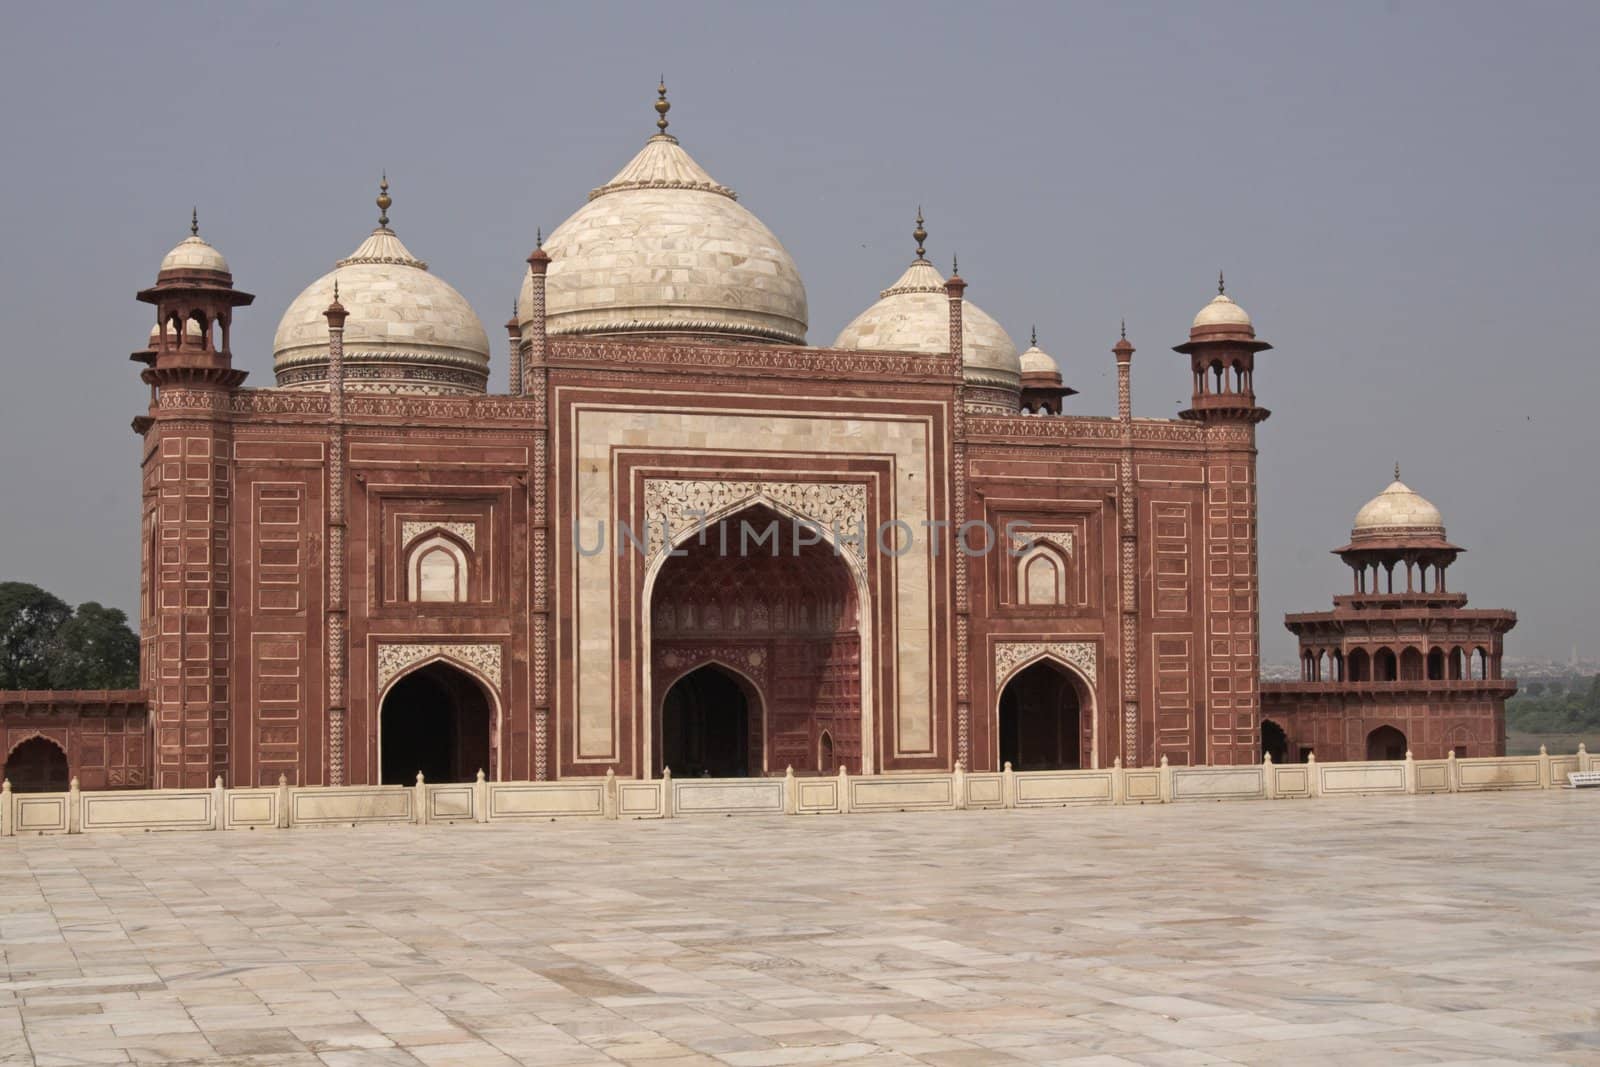 Mosque at the Taj Mahal by JeremyRichards